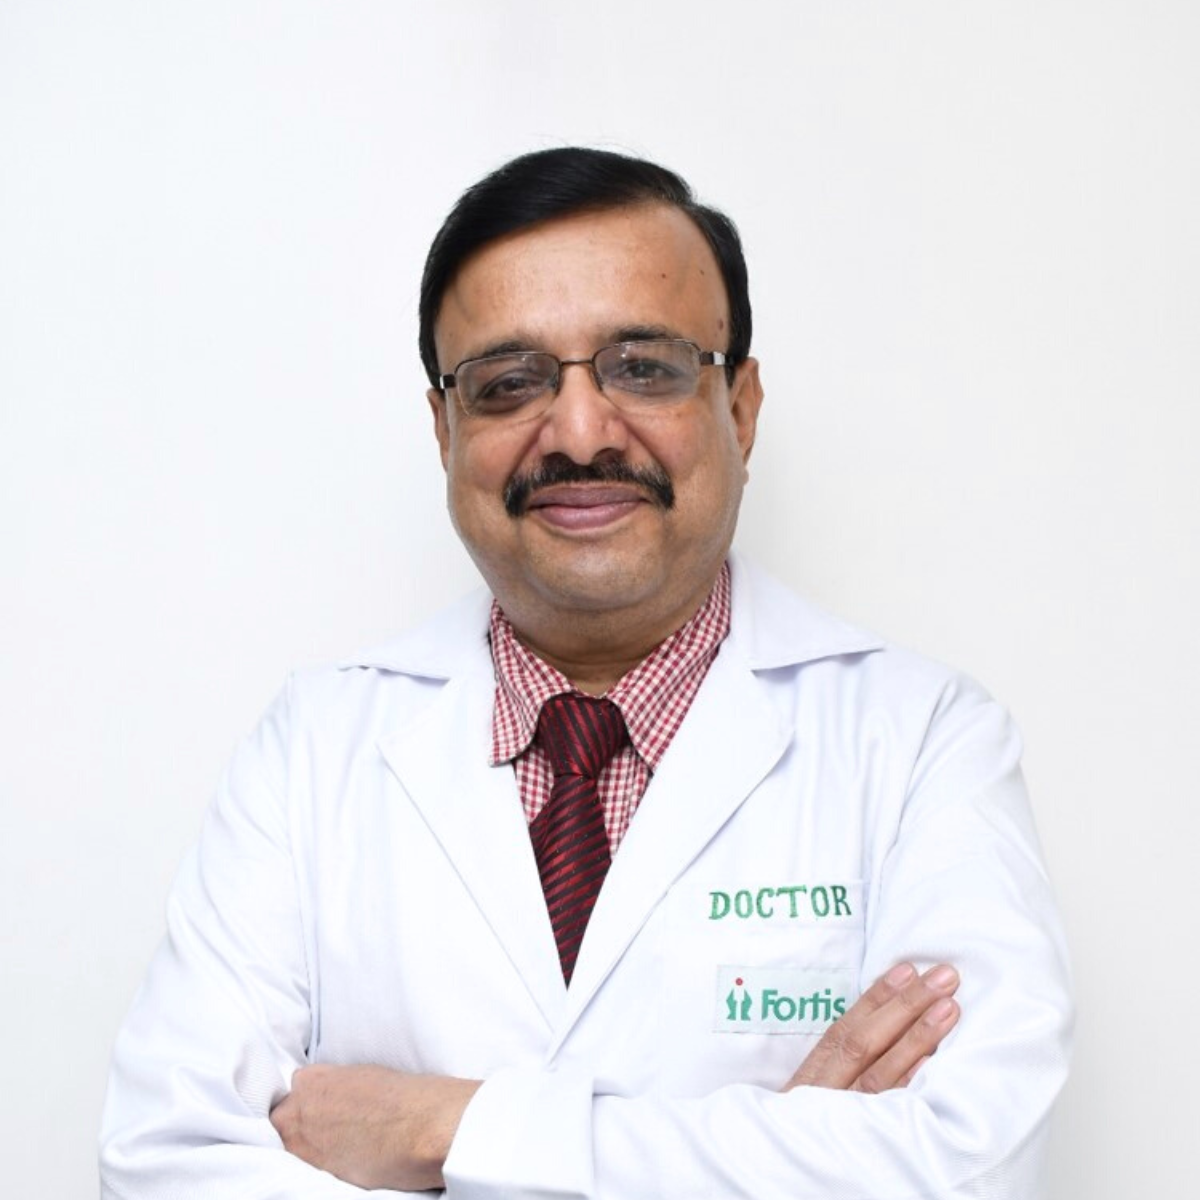 Dr. Ramesh Agarwalla